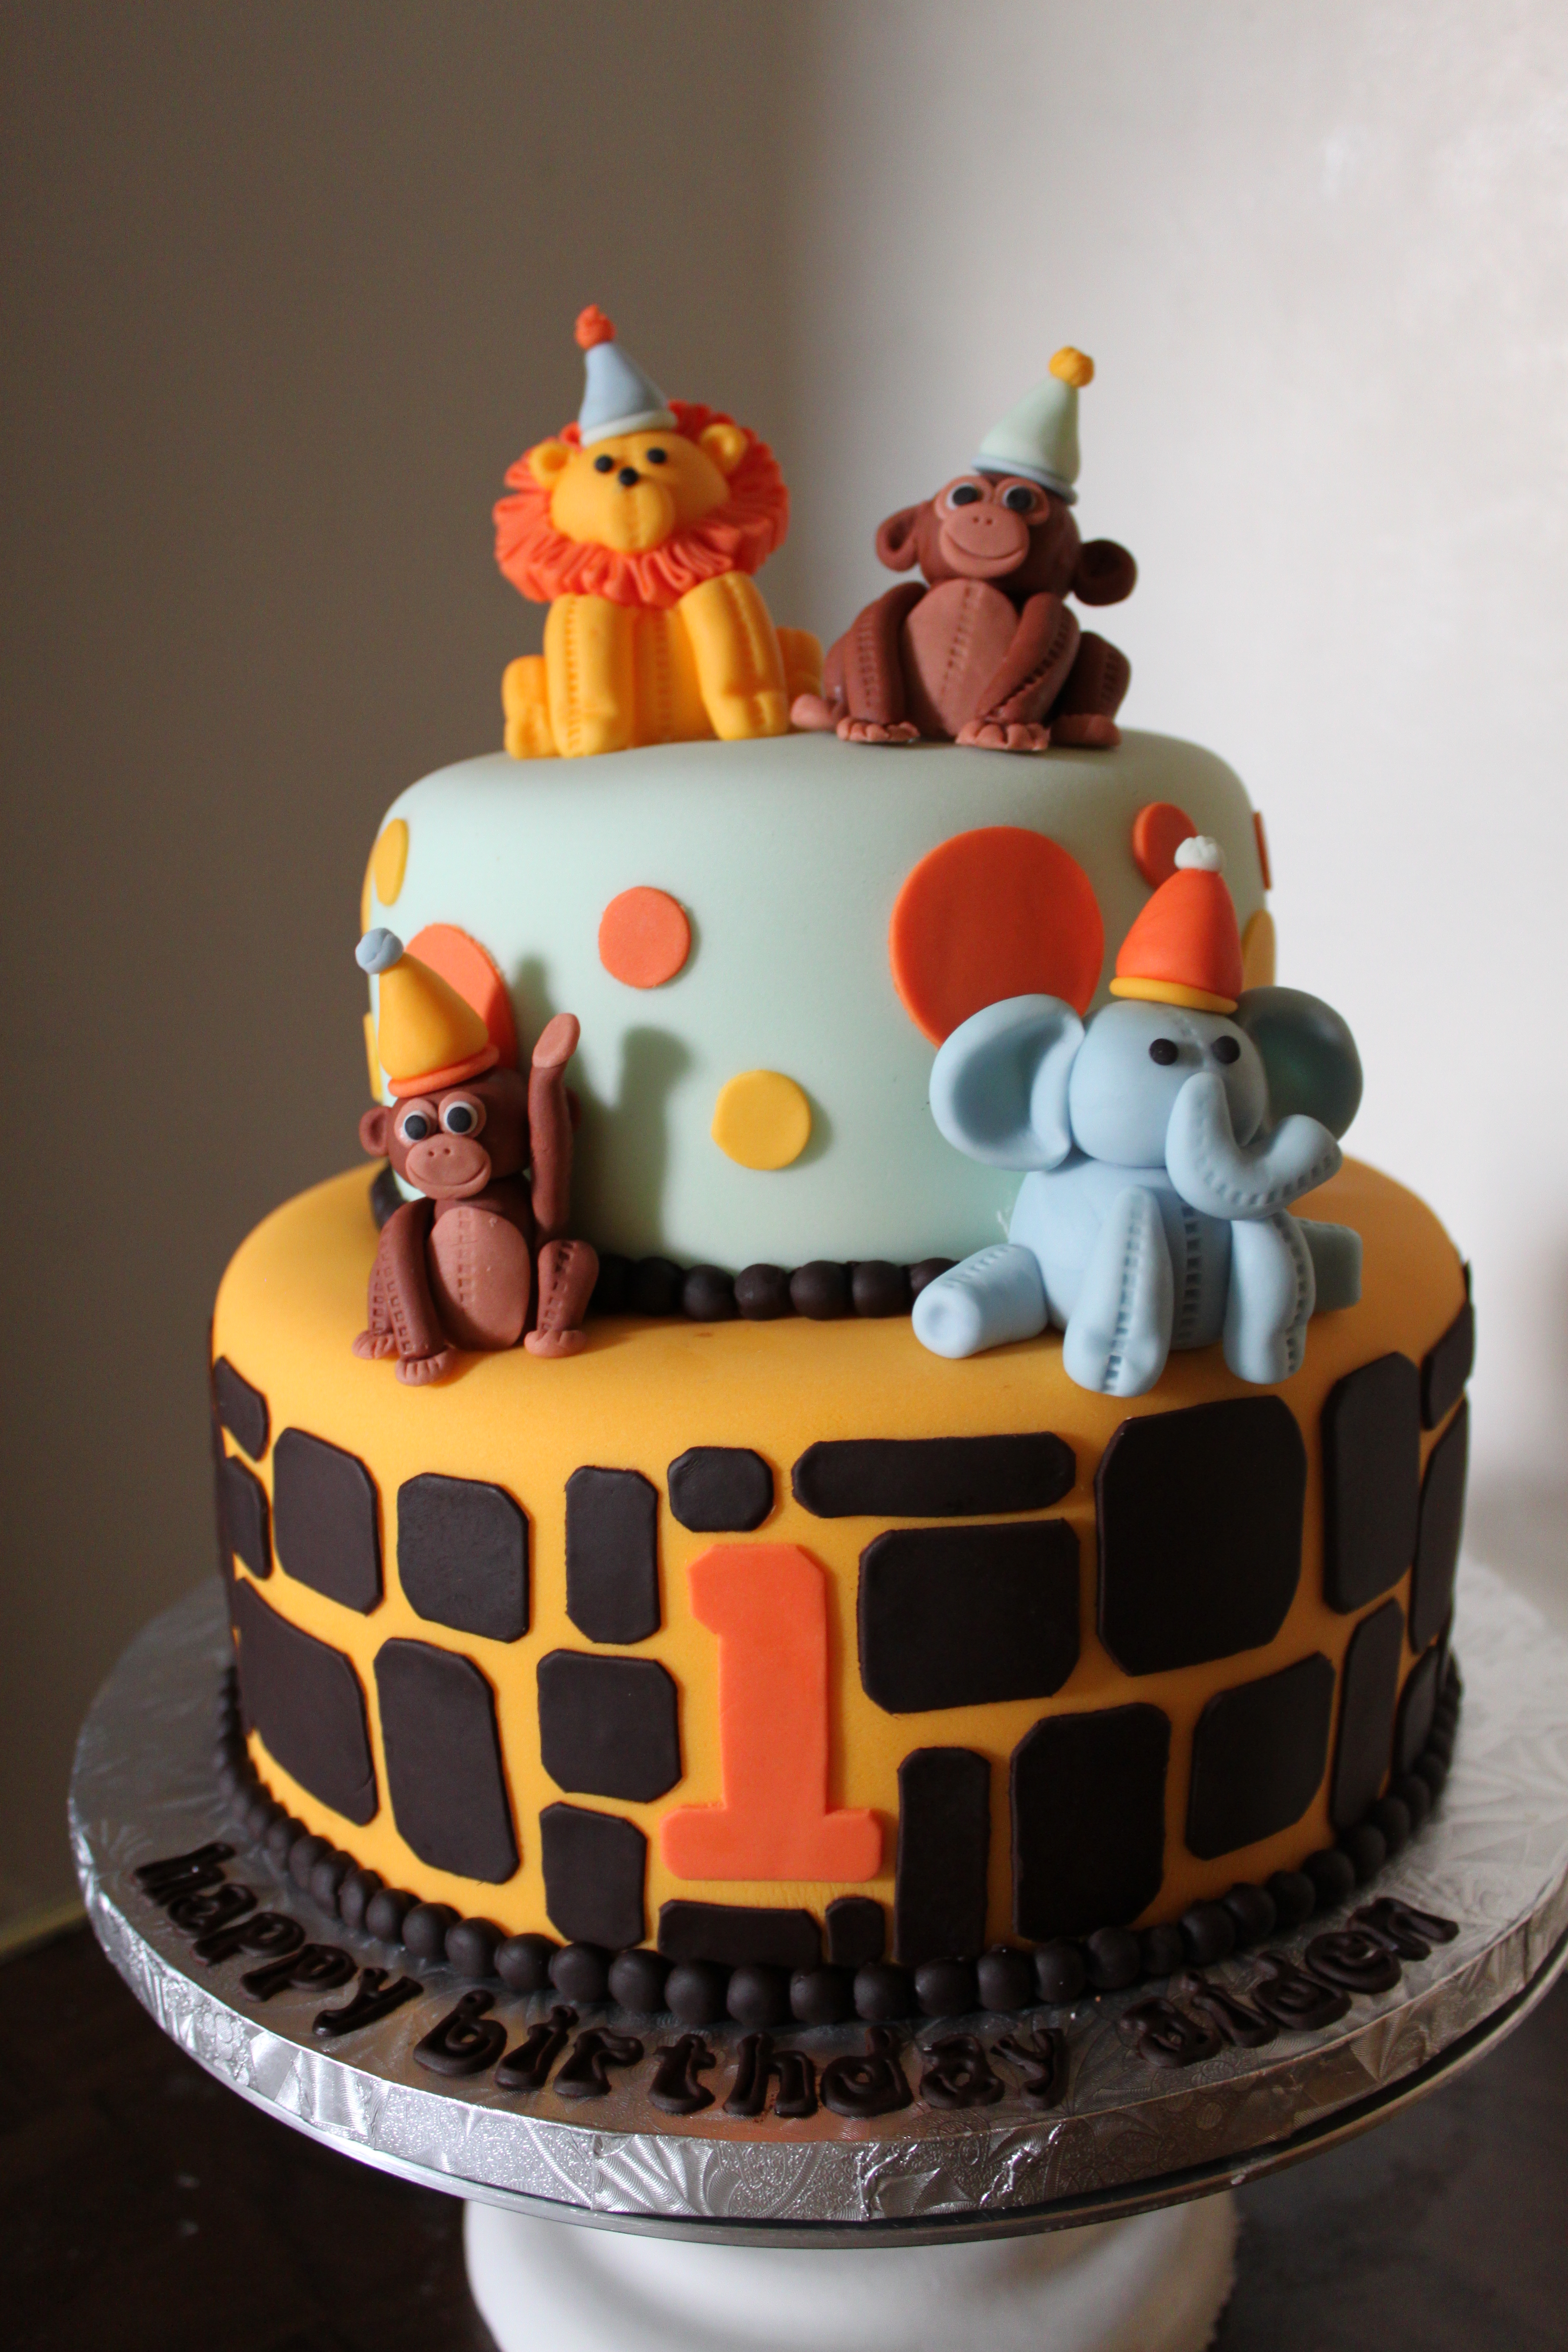 Jungle birthday cake - Cake by Beth Mottershead - CakesDecor